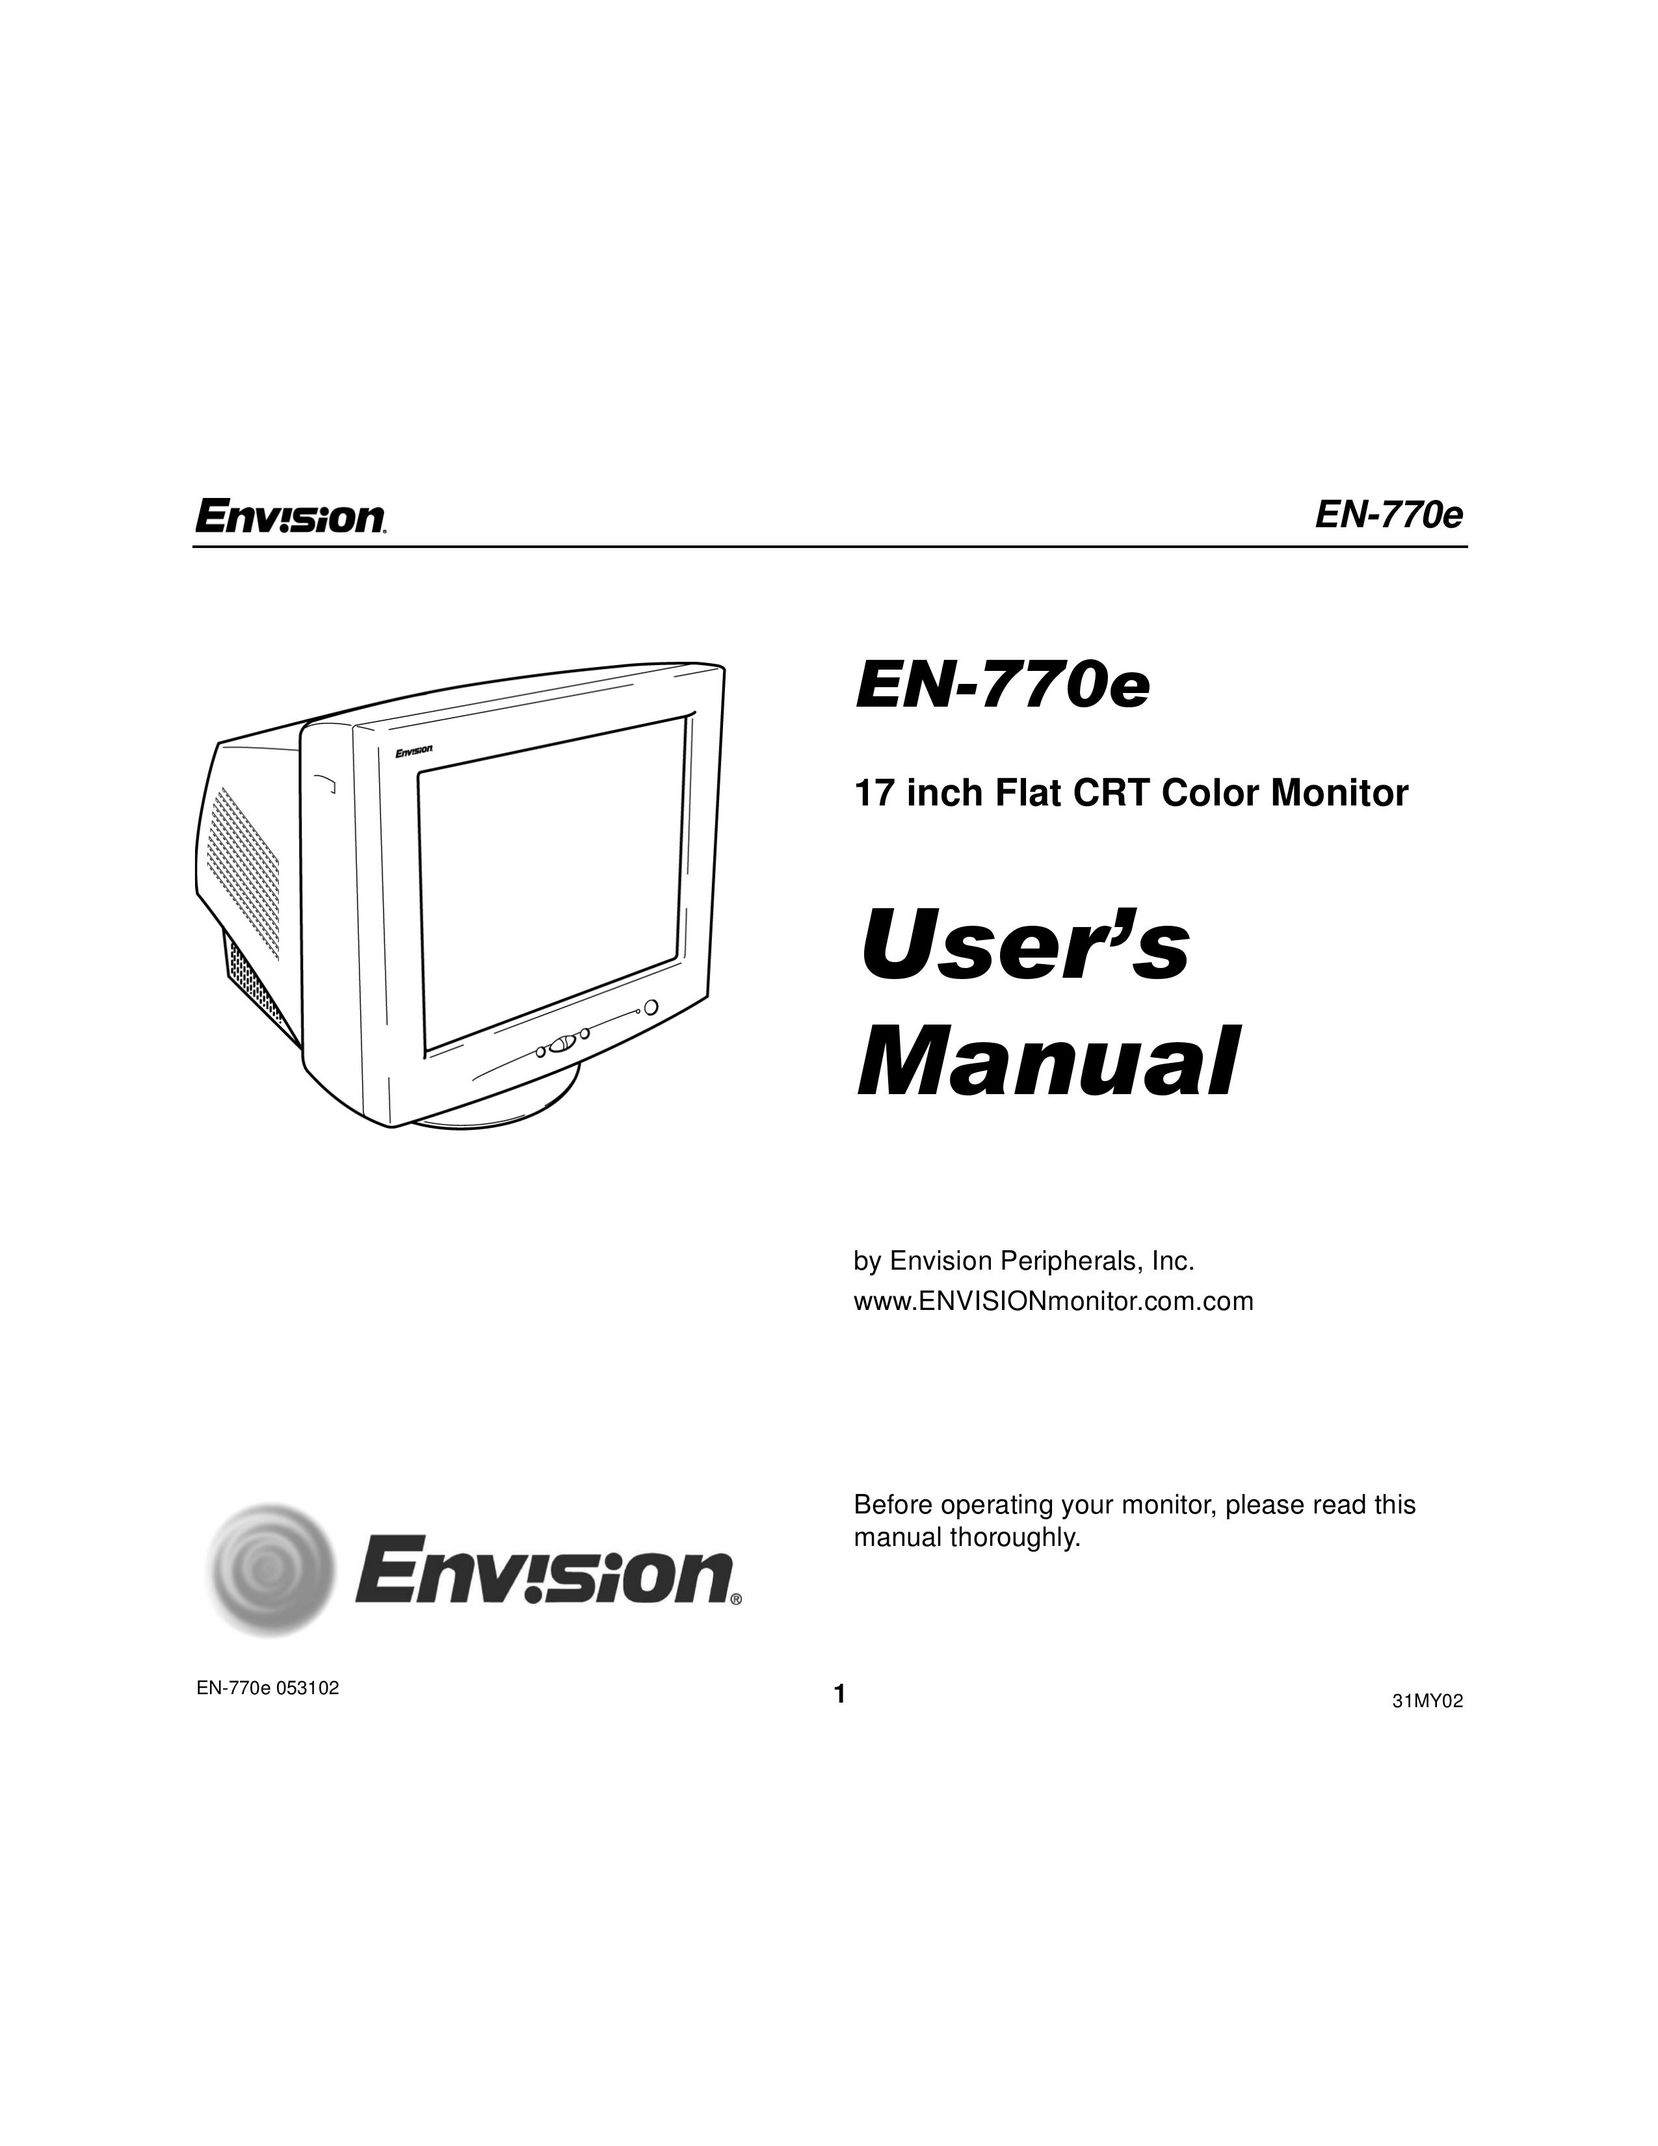 Envision Peripherals EN-770e Computer Monitor User Manual